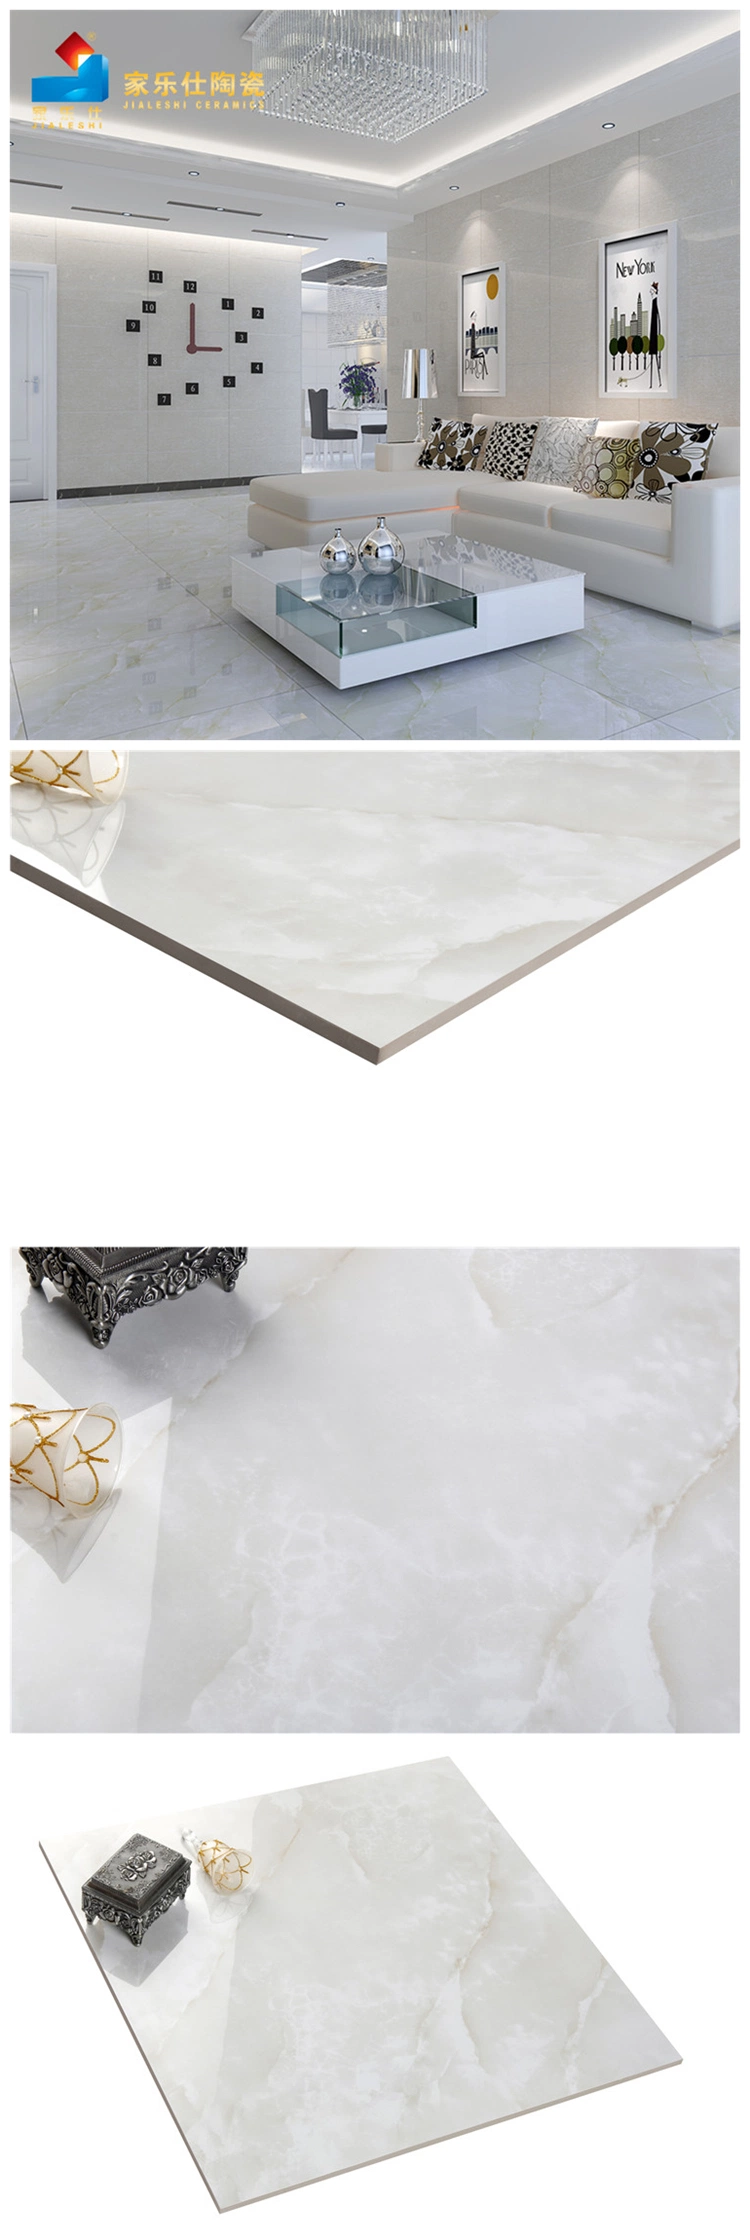 Factory Price Porcelain Polished Glazed Ceramic Floor Tiles Marble Wall Tiles 600X600